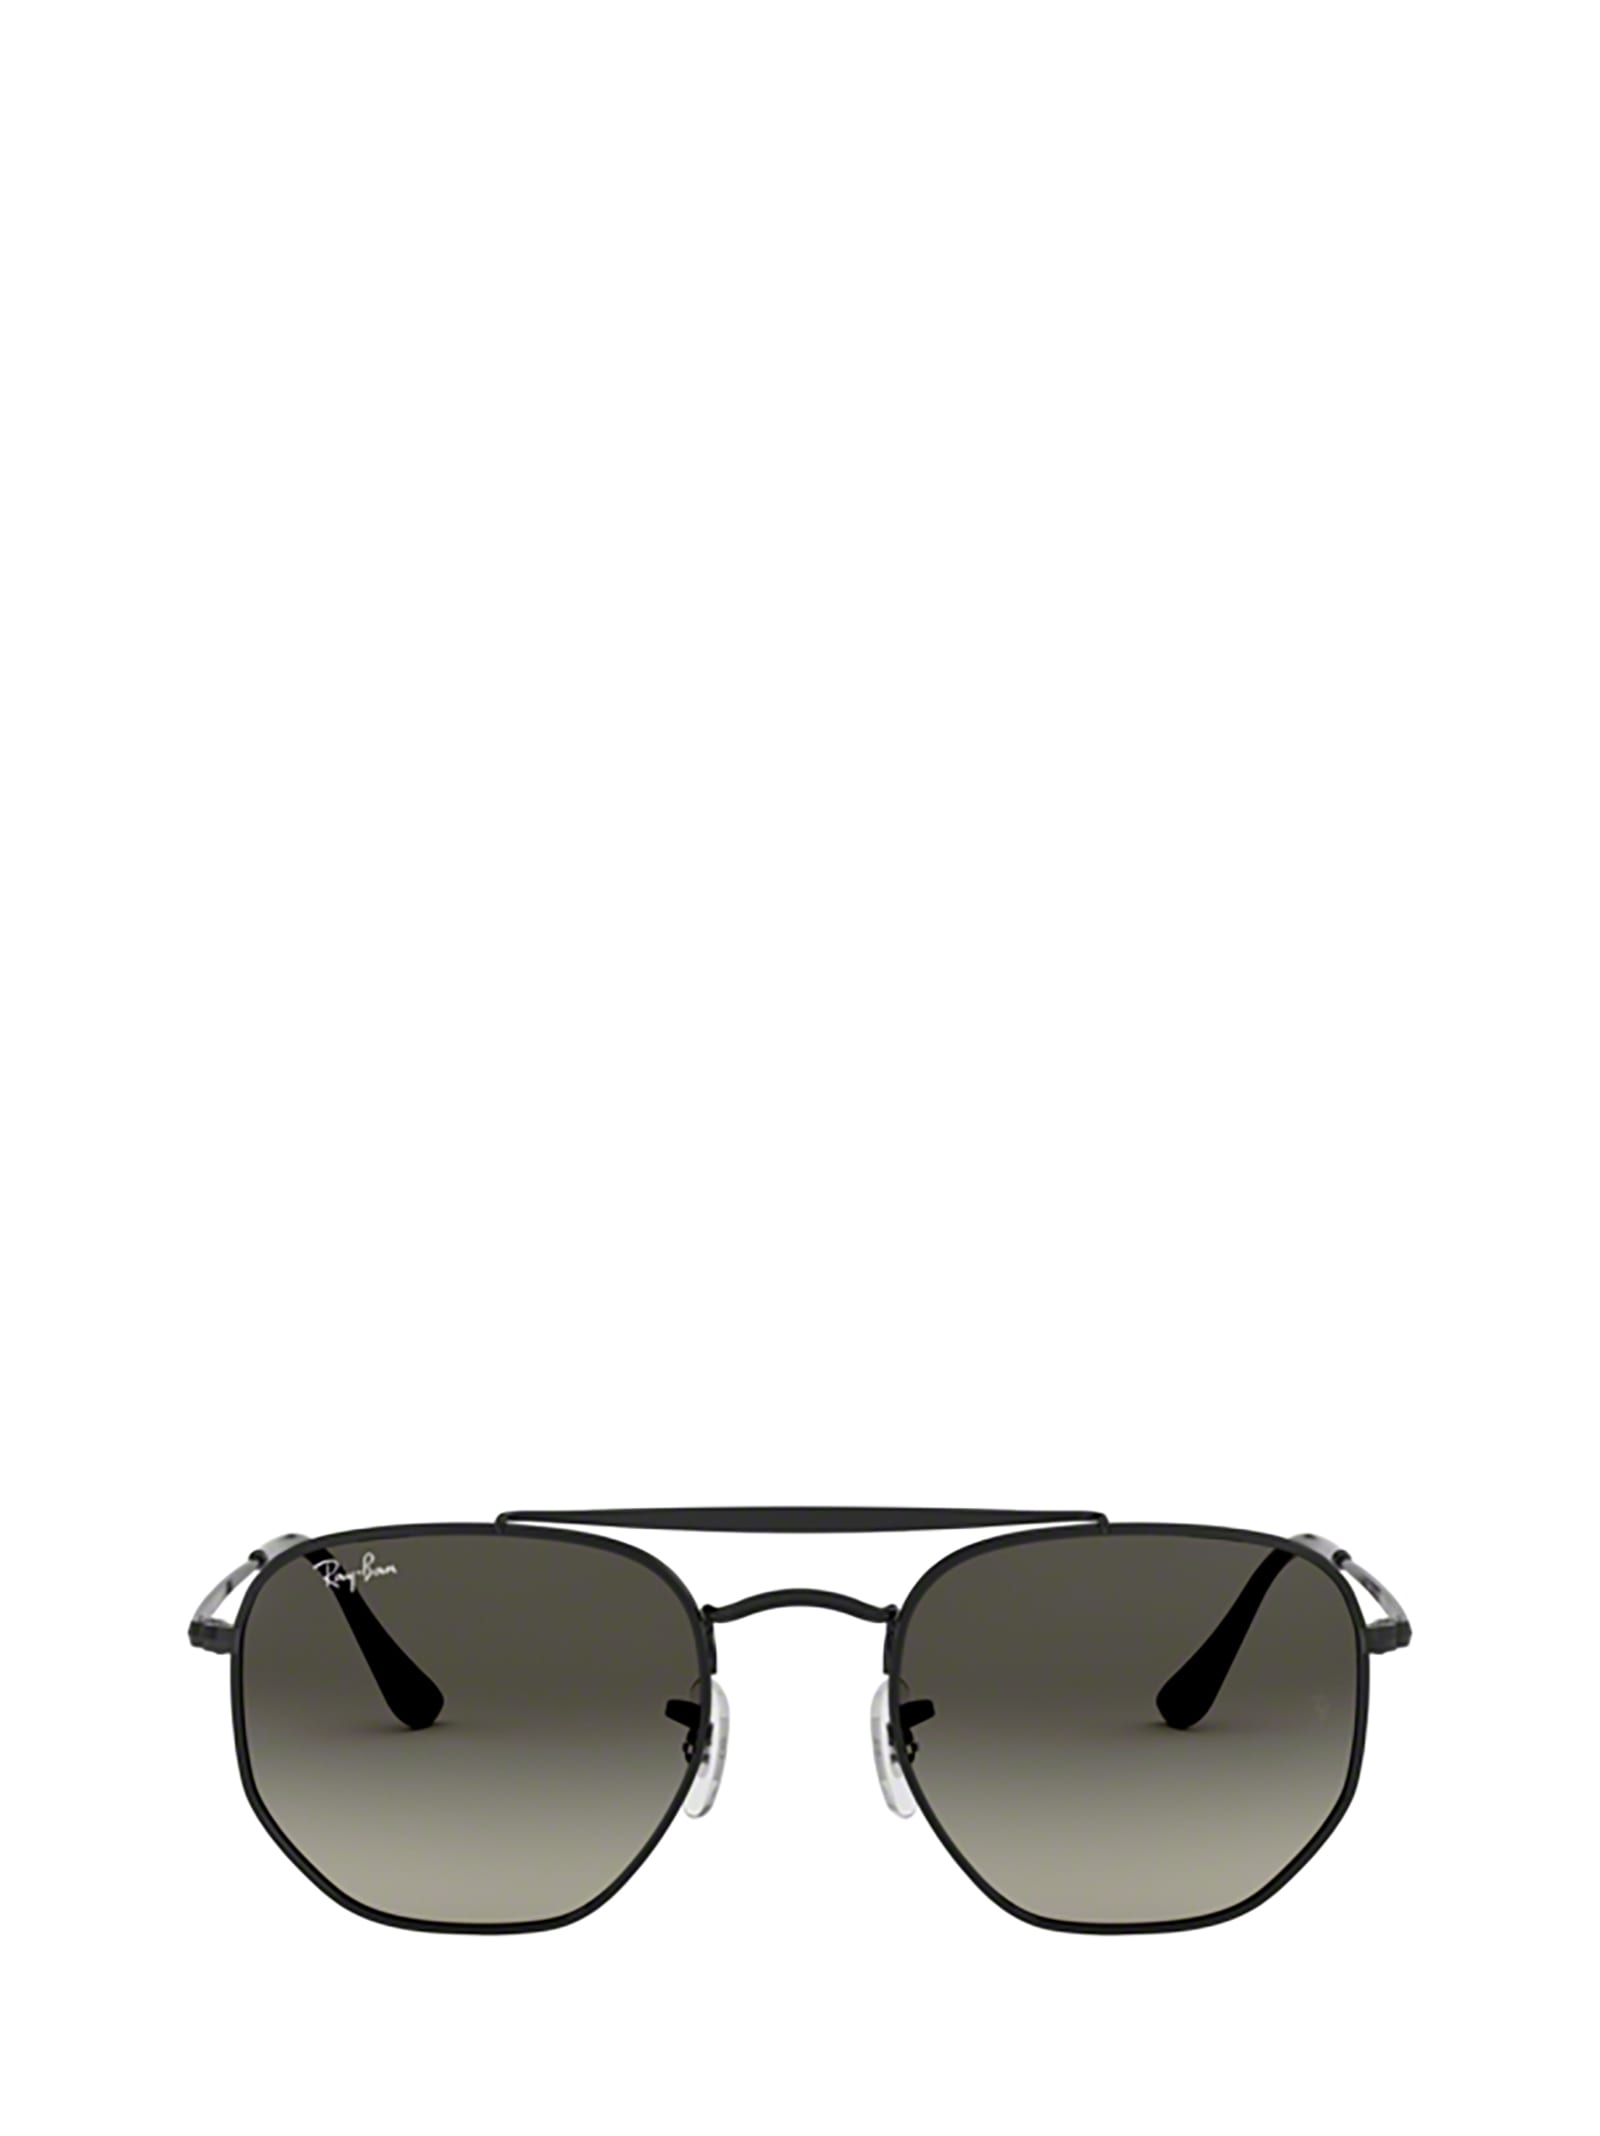 Ray Ban Ray-ban Rb3648 Black Sunglasses